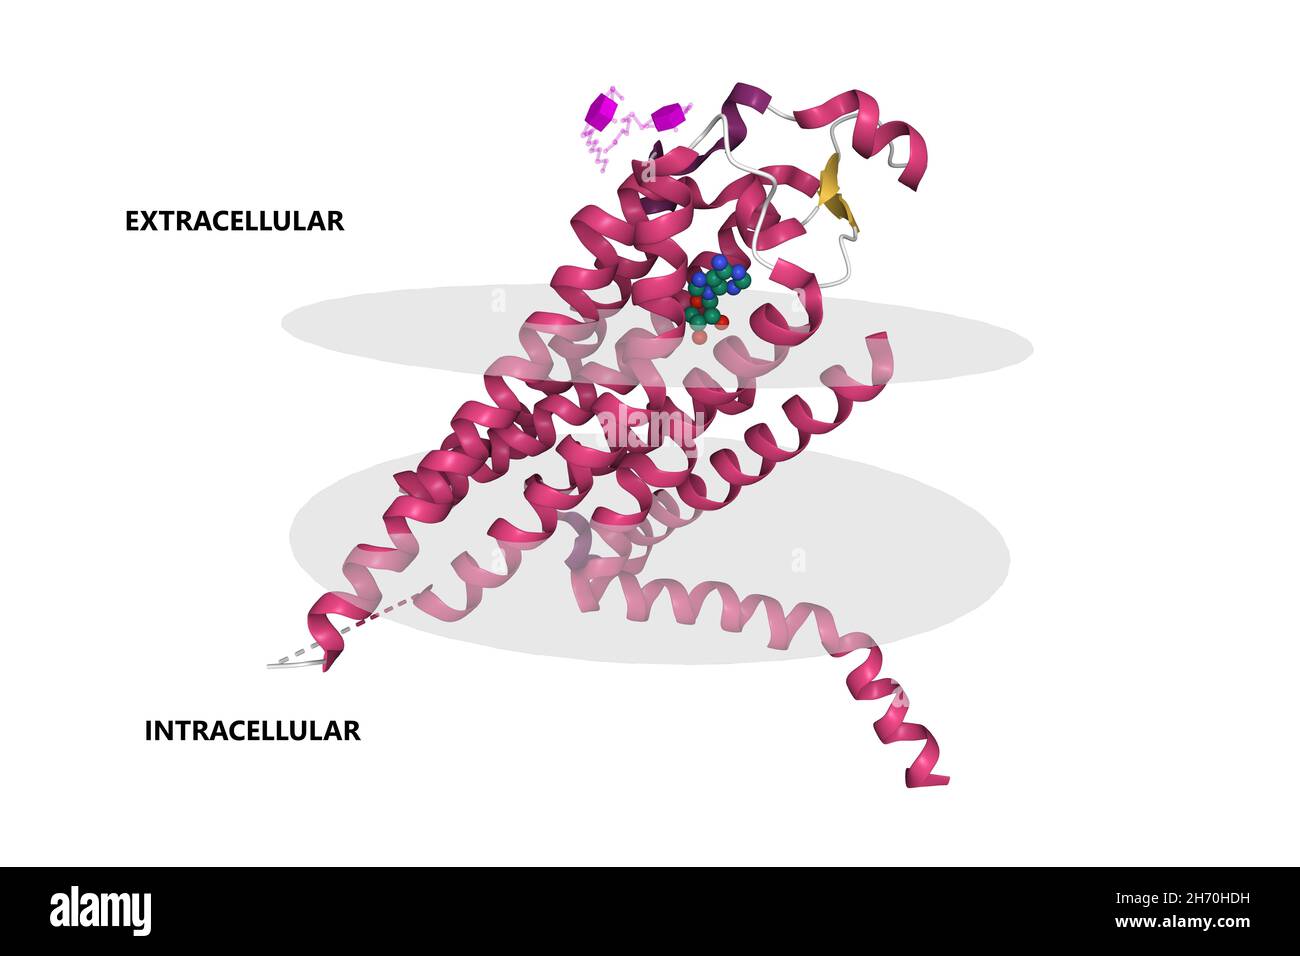 Humaner Adenosin-A2A-Rezeptor mit Adenosin-Bindung. 3D Cartoon-Modell, sekundäre Struktur Farbgebung, PDB 2ydo, weißer Hintergrund Stockfoto